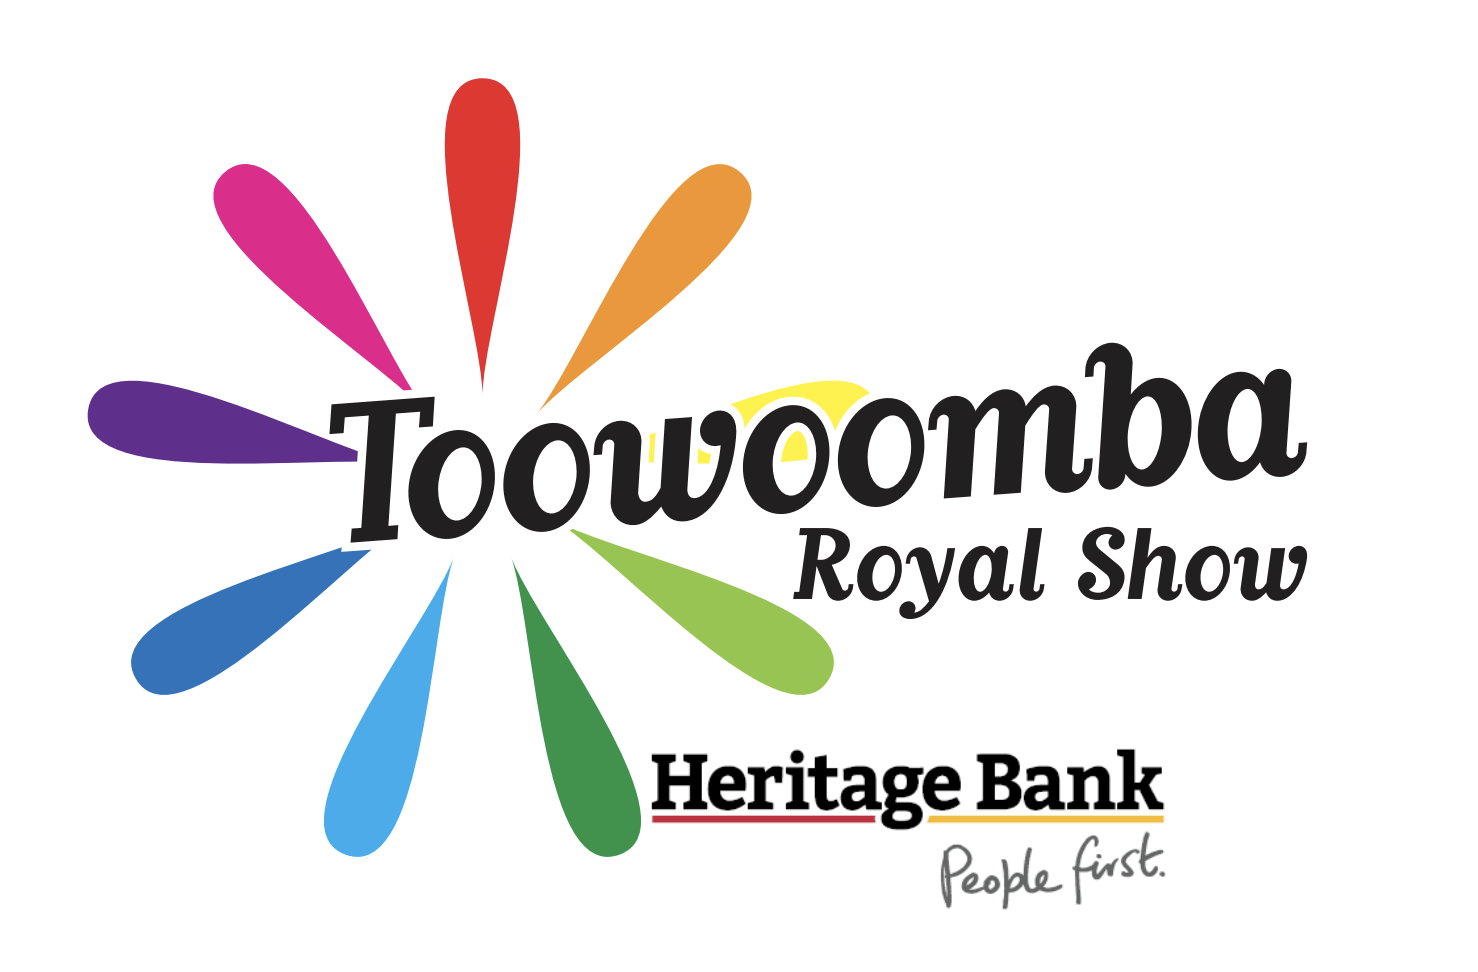 The Royal Toowoomba Show logo